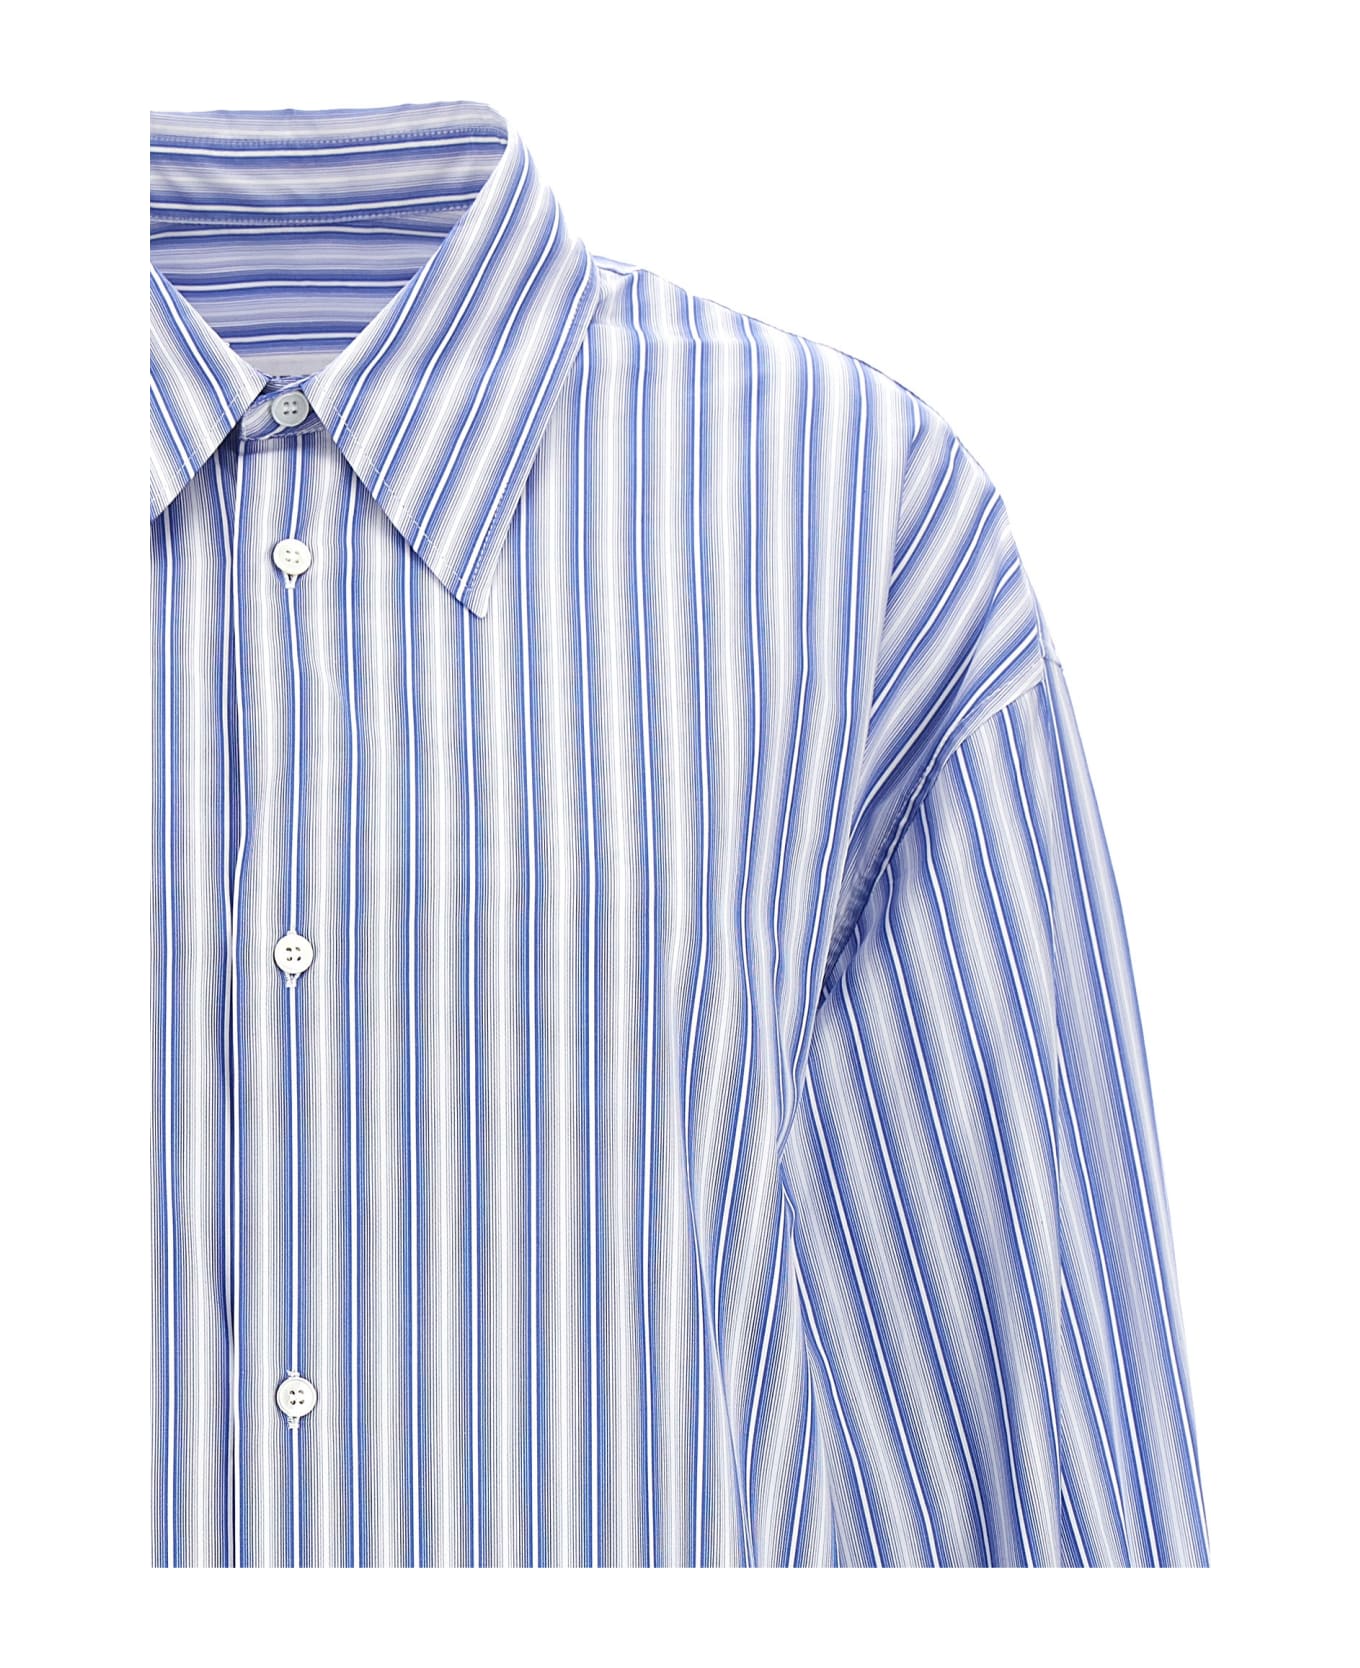 MM6 Maison Margiela Striped Shirt - BLUE/WHITE